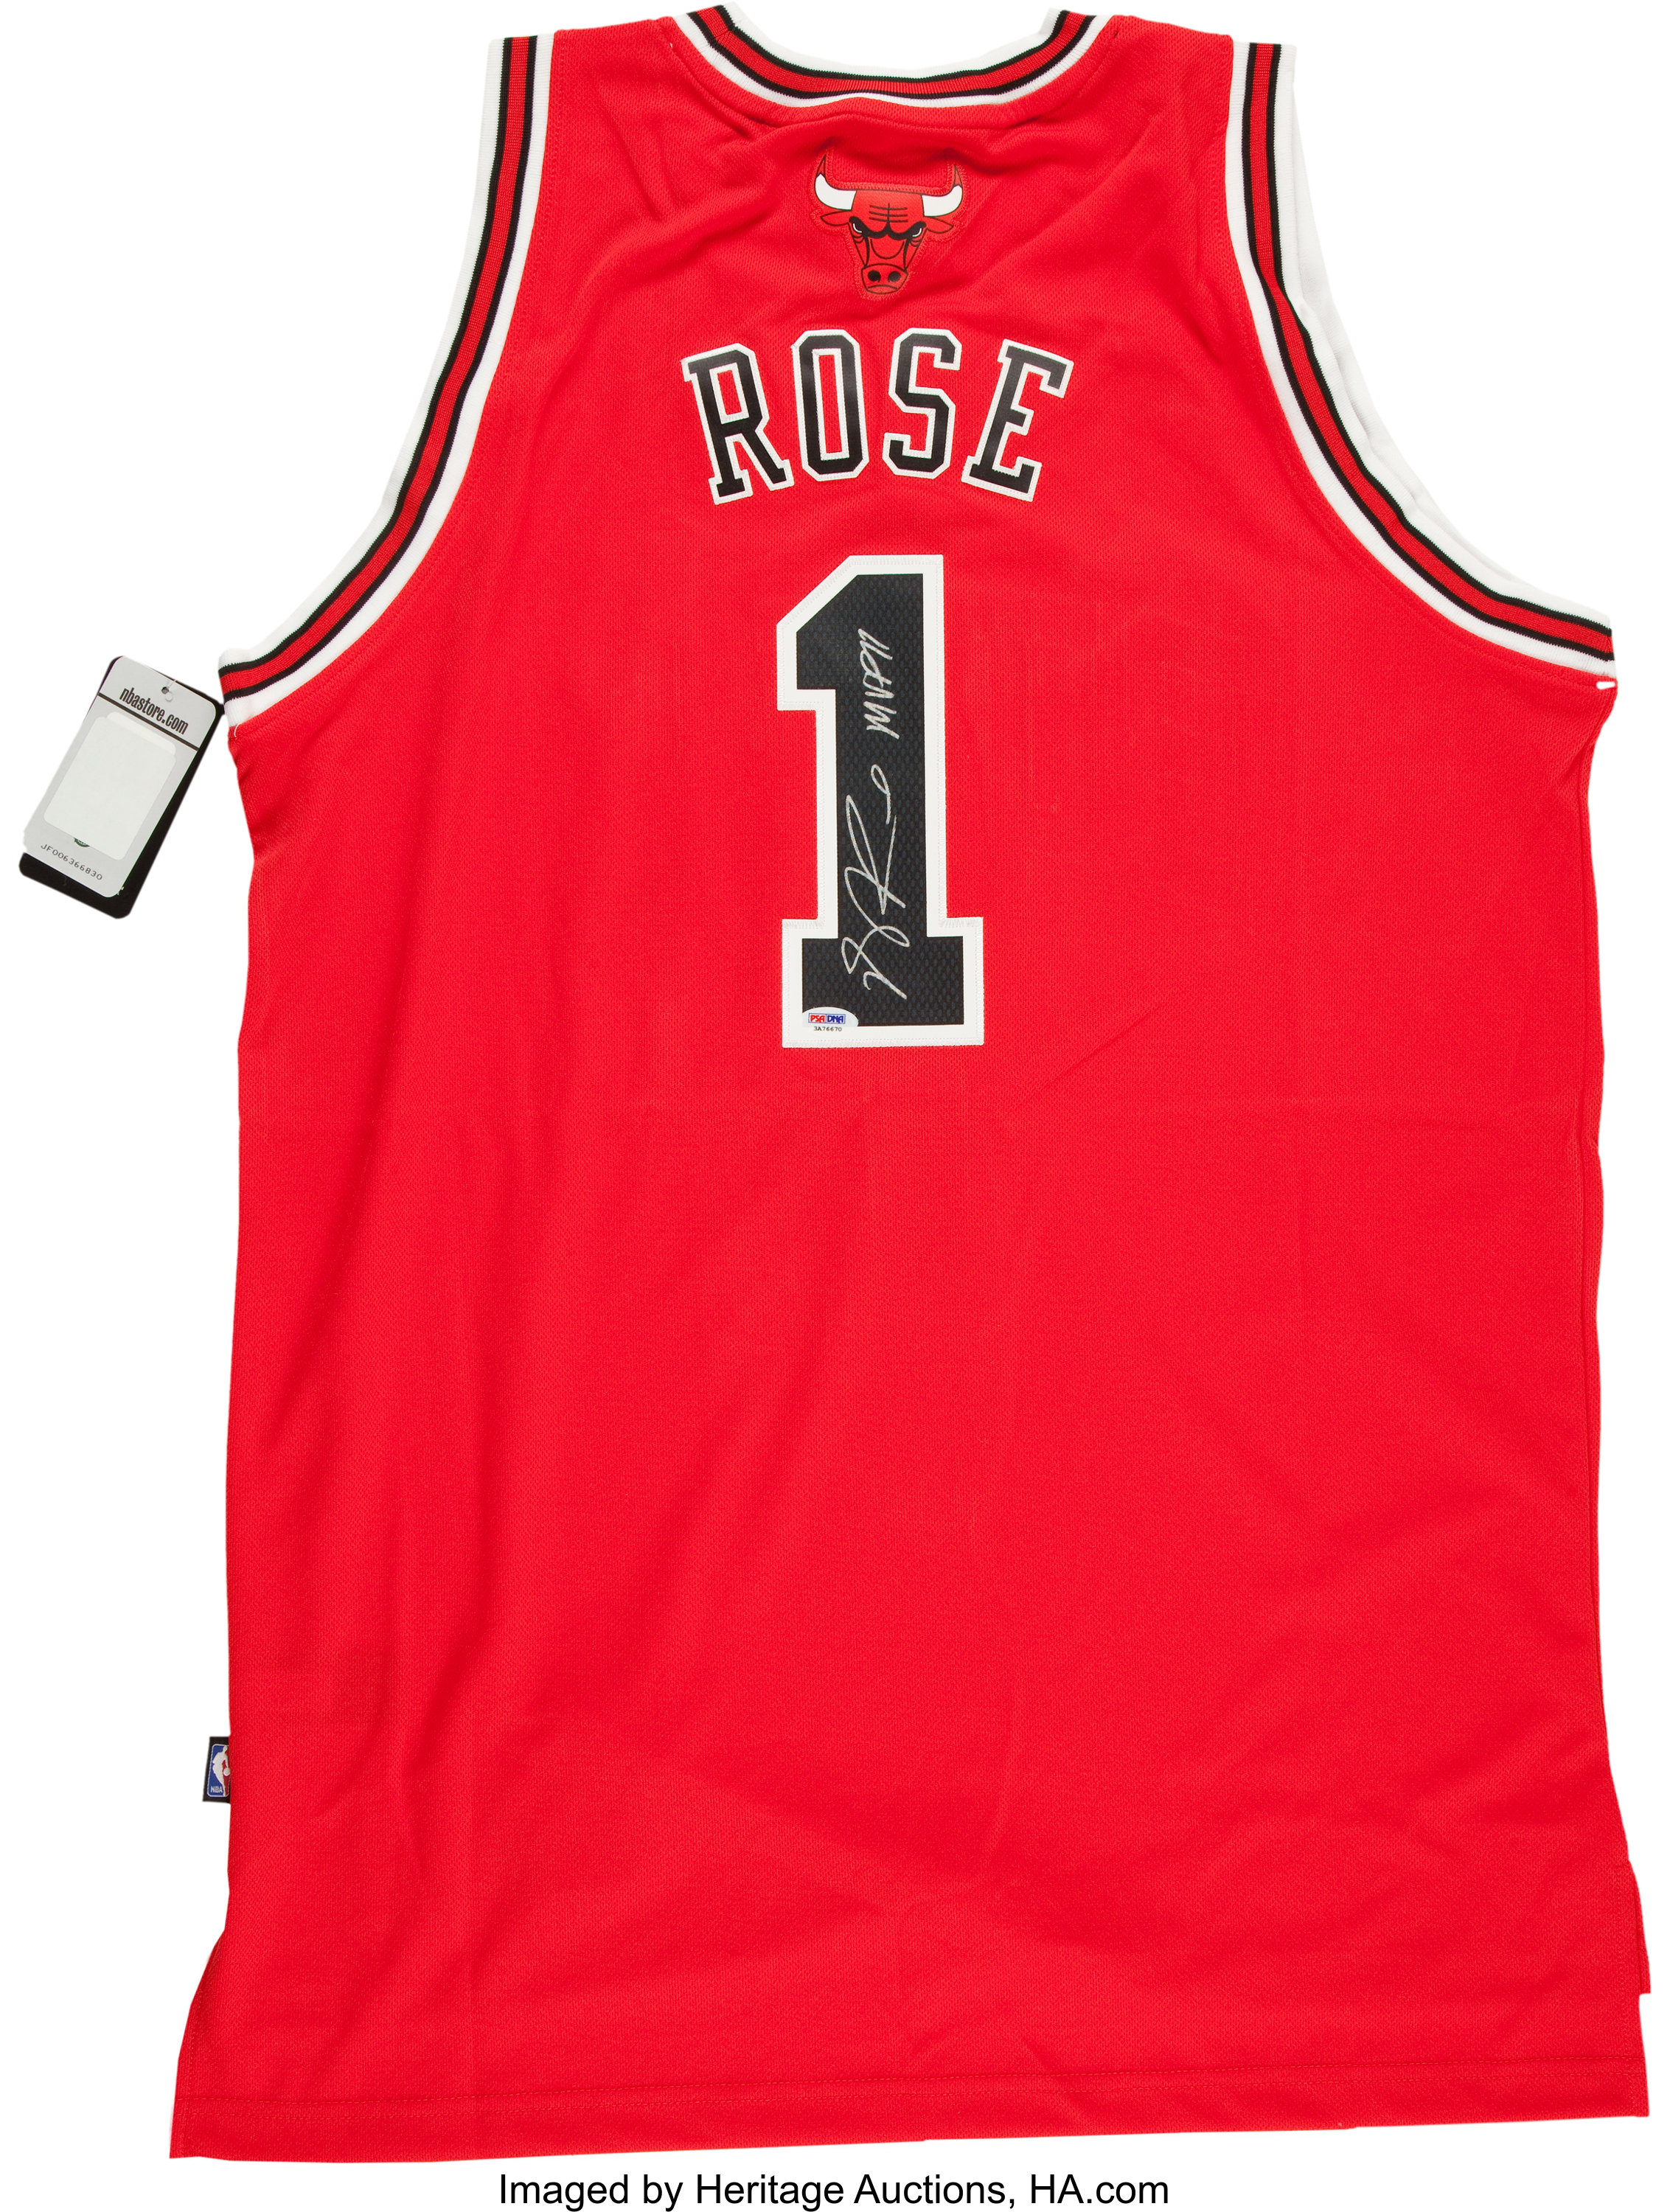 Derrick Rose autographed Jersey (Chicago Bulls)